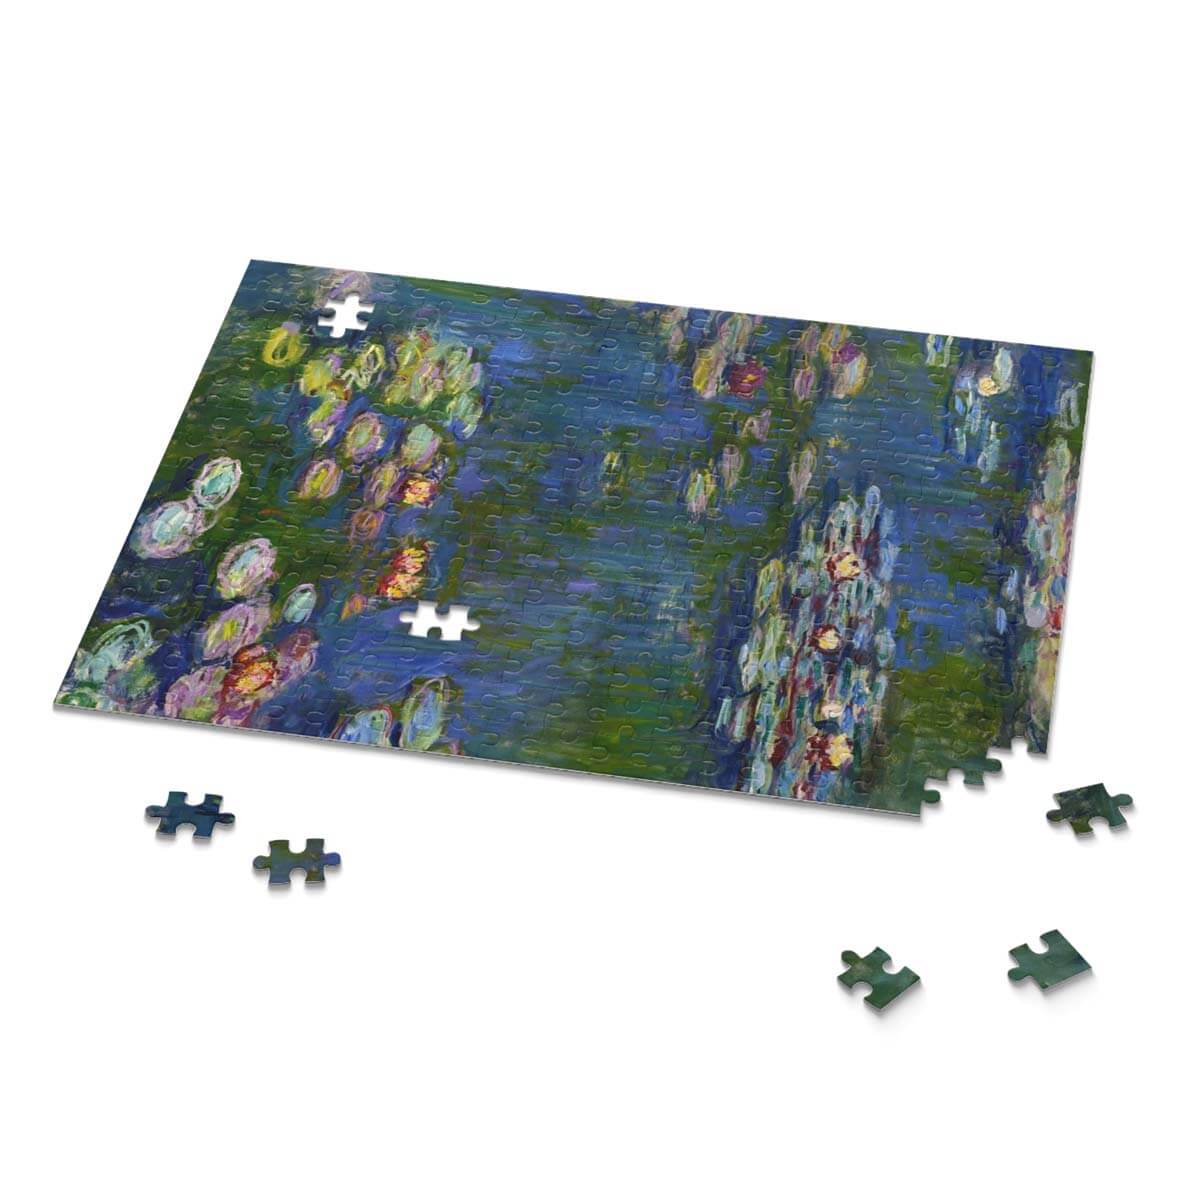 Claude Monet-inspired puzzle illustration